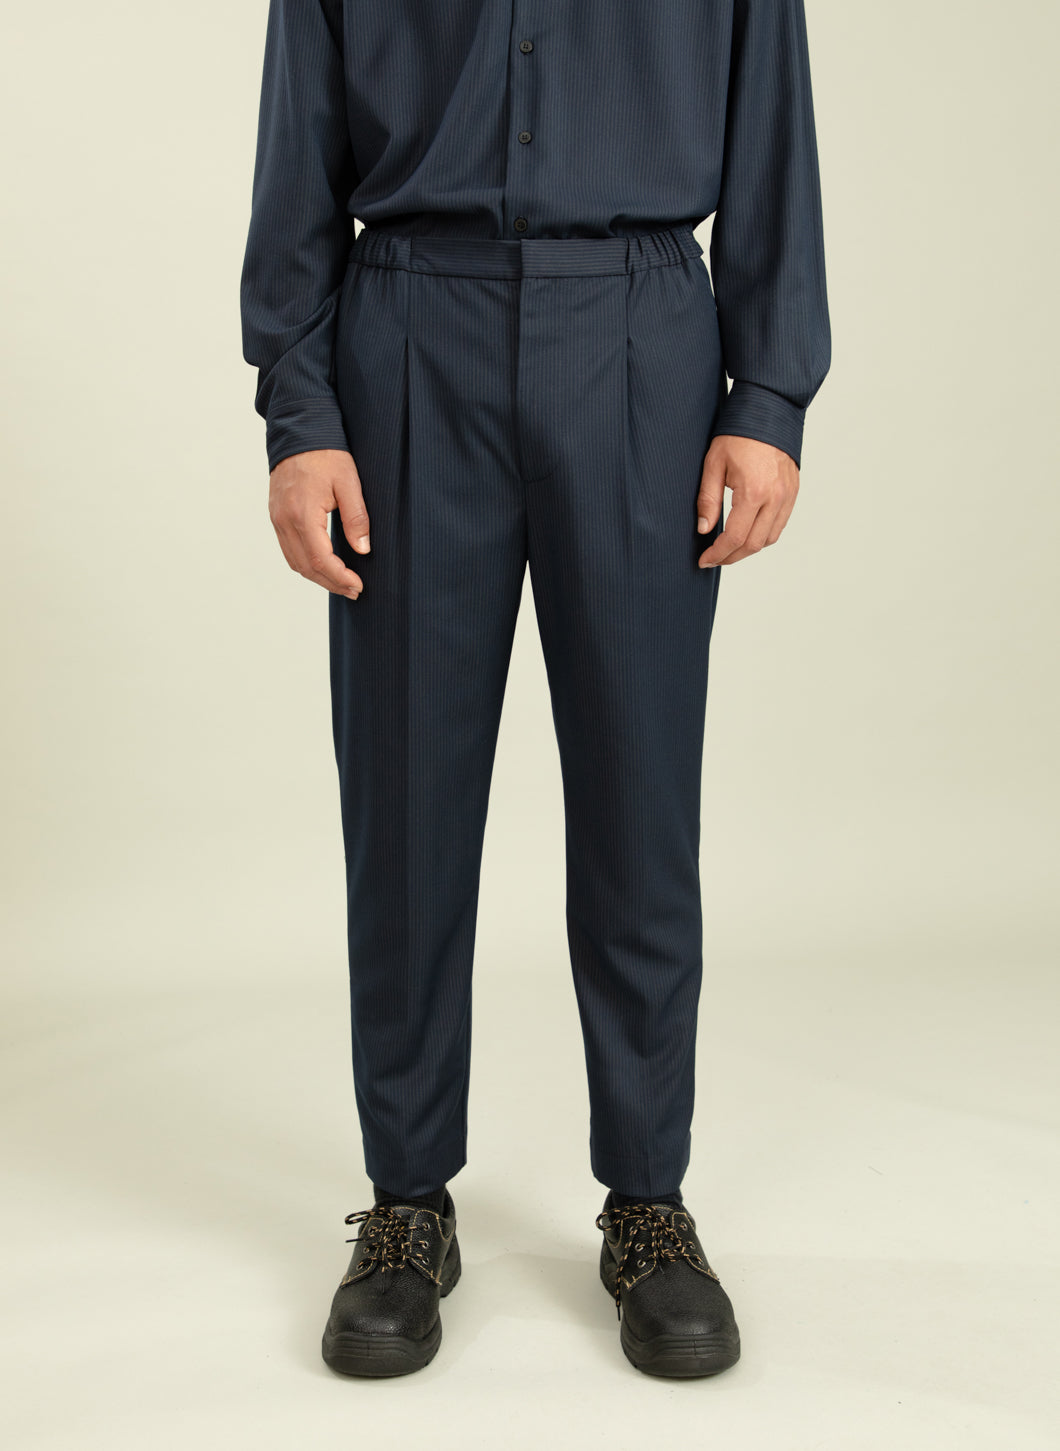 Pleated Pants in Navy Fine Stripe Serge Fabric